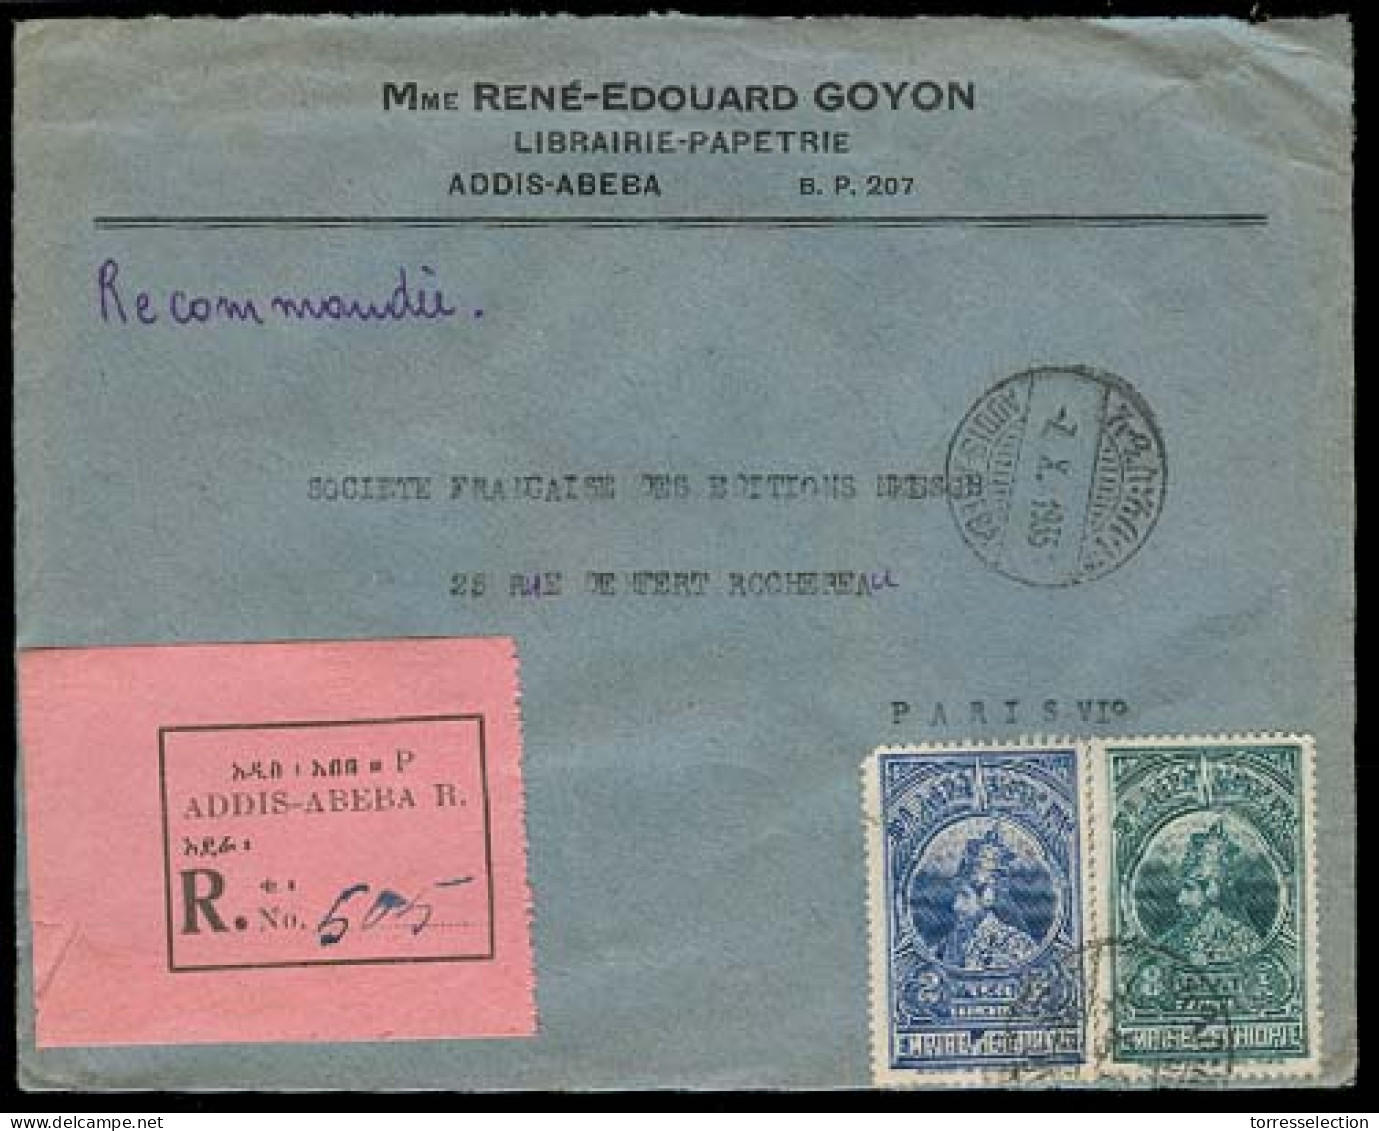 ETHIOPIA. 1935. Addis - Abeba - France. Reg Fkd Env / Pmk Label. VF. Arrival Cds. - Etiopía